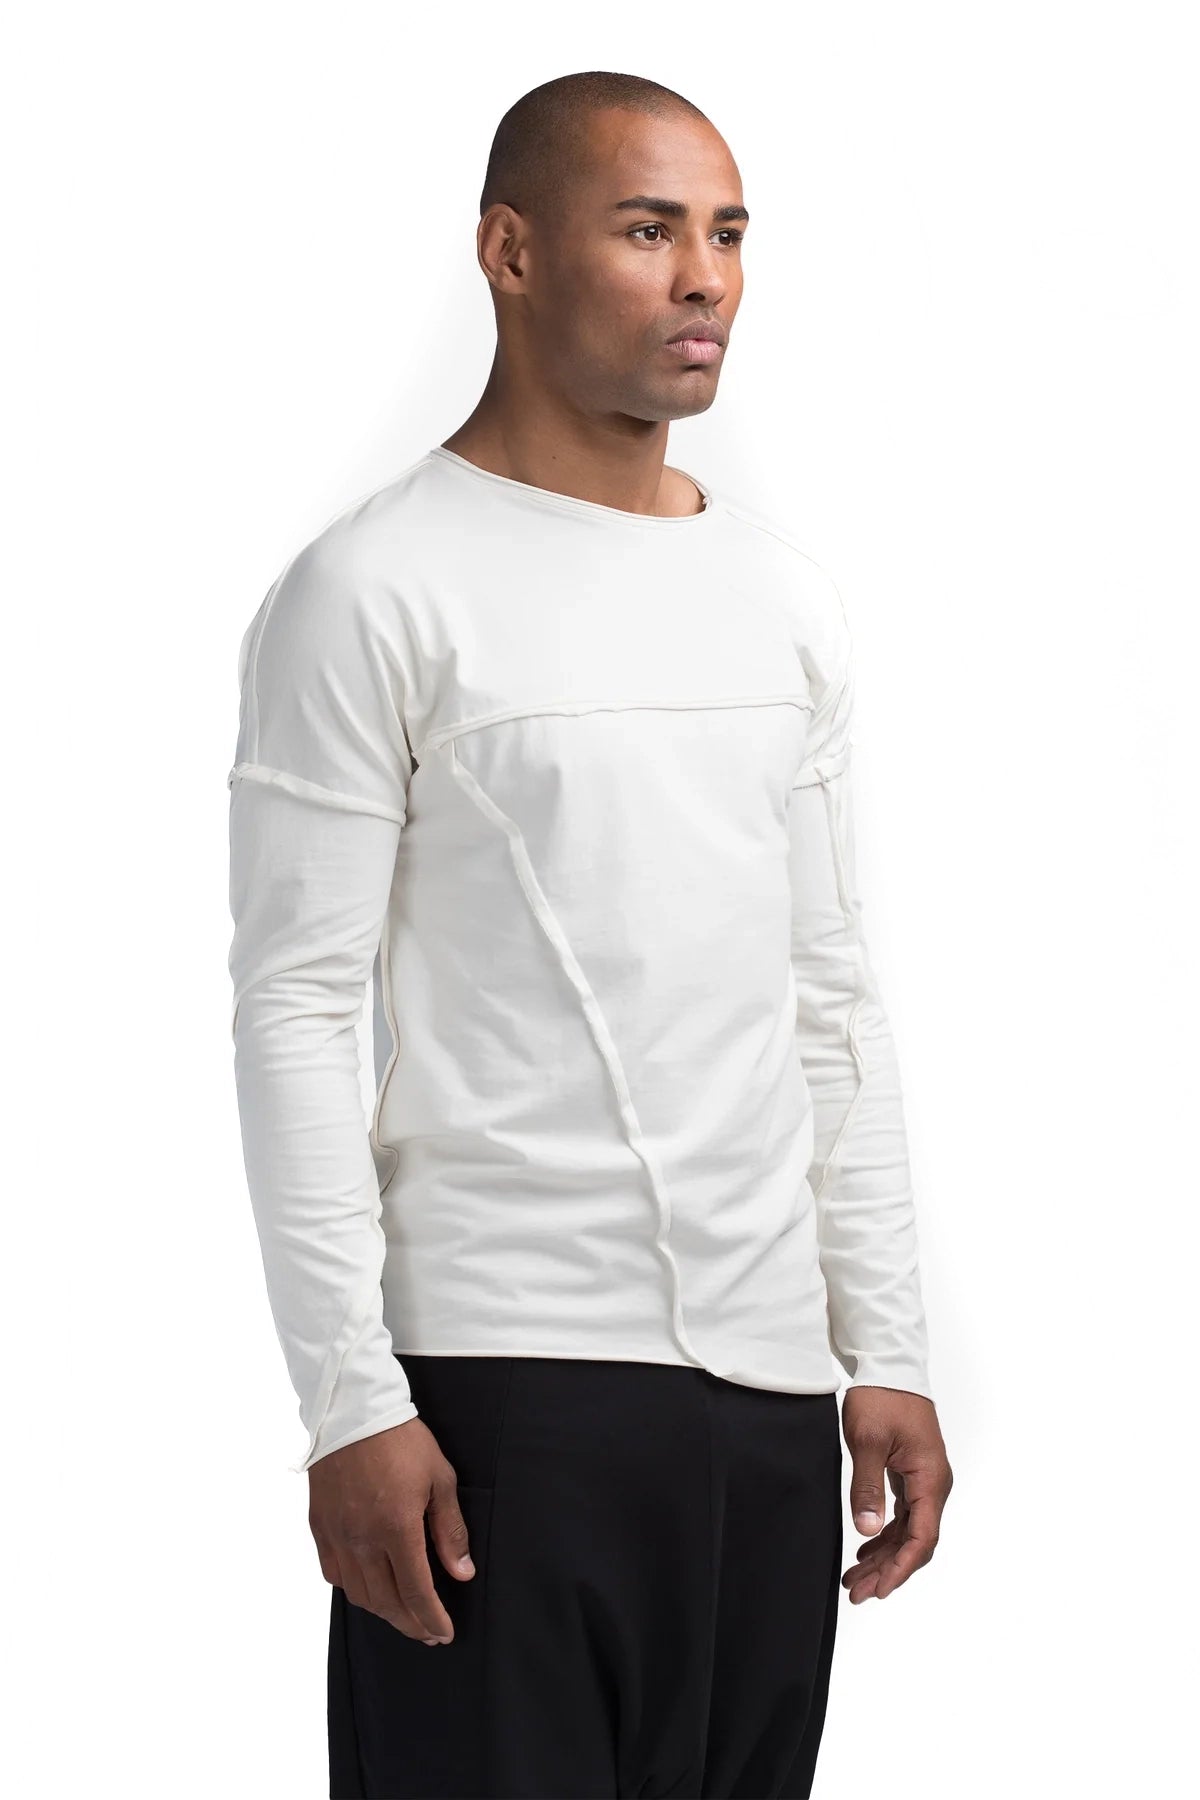 Bundle: Black, White and Grey Long Sleeve T-shirt